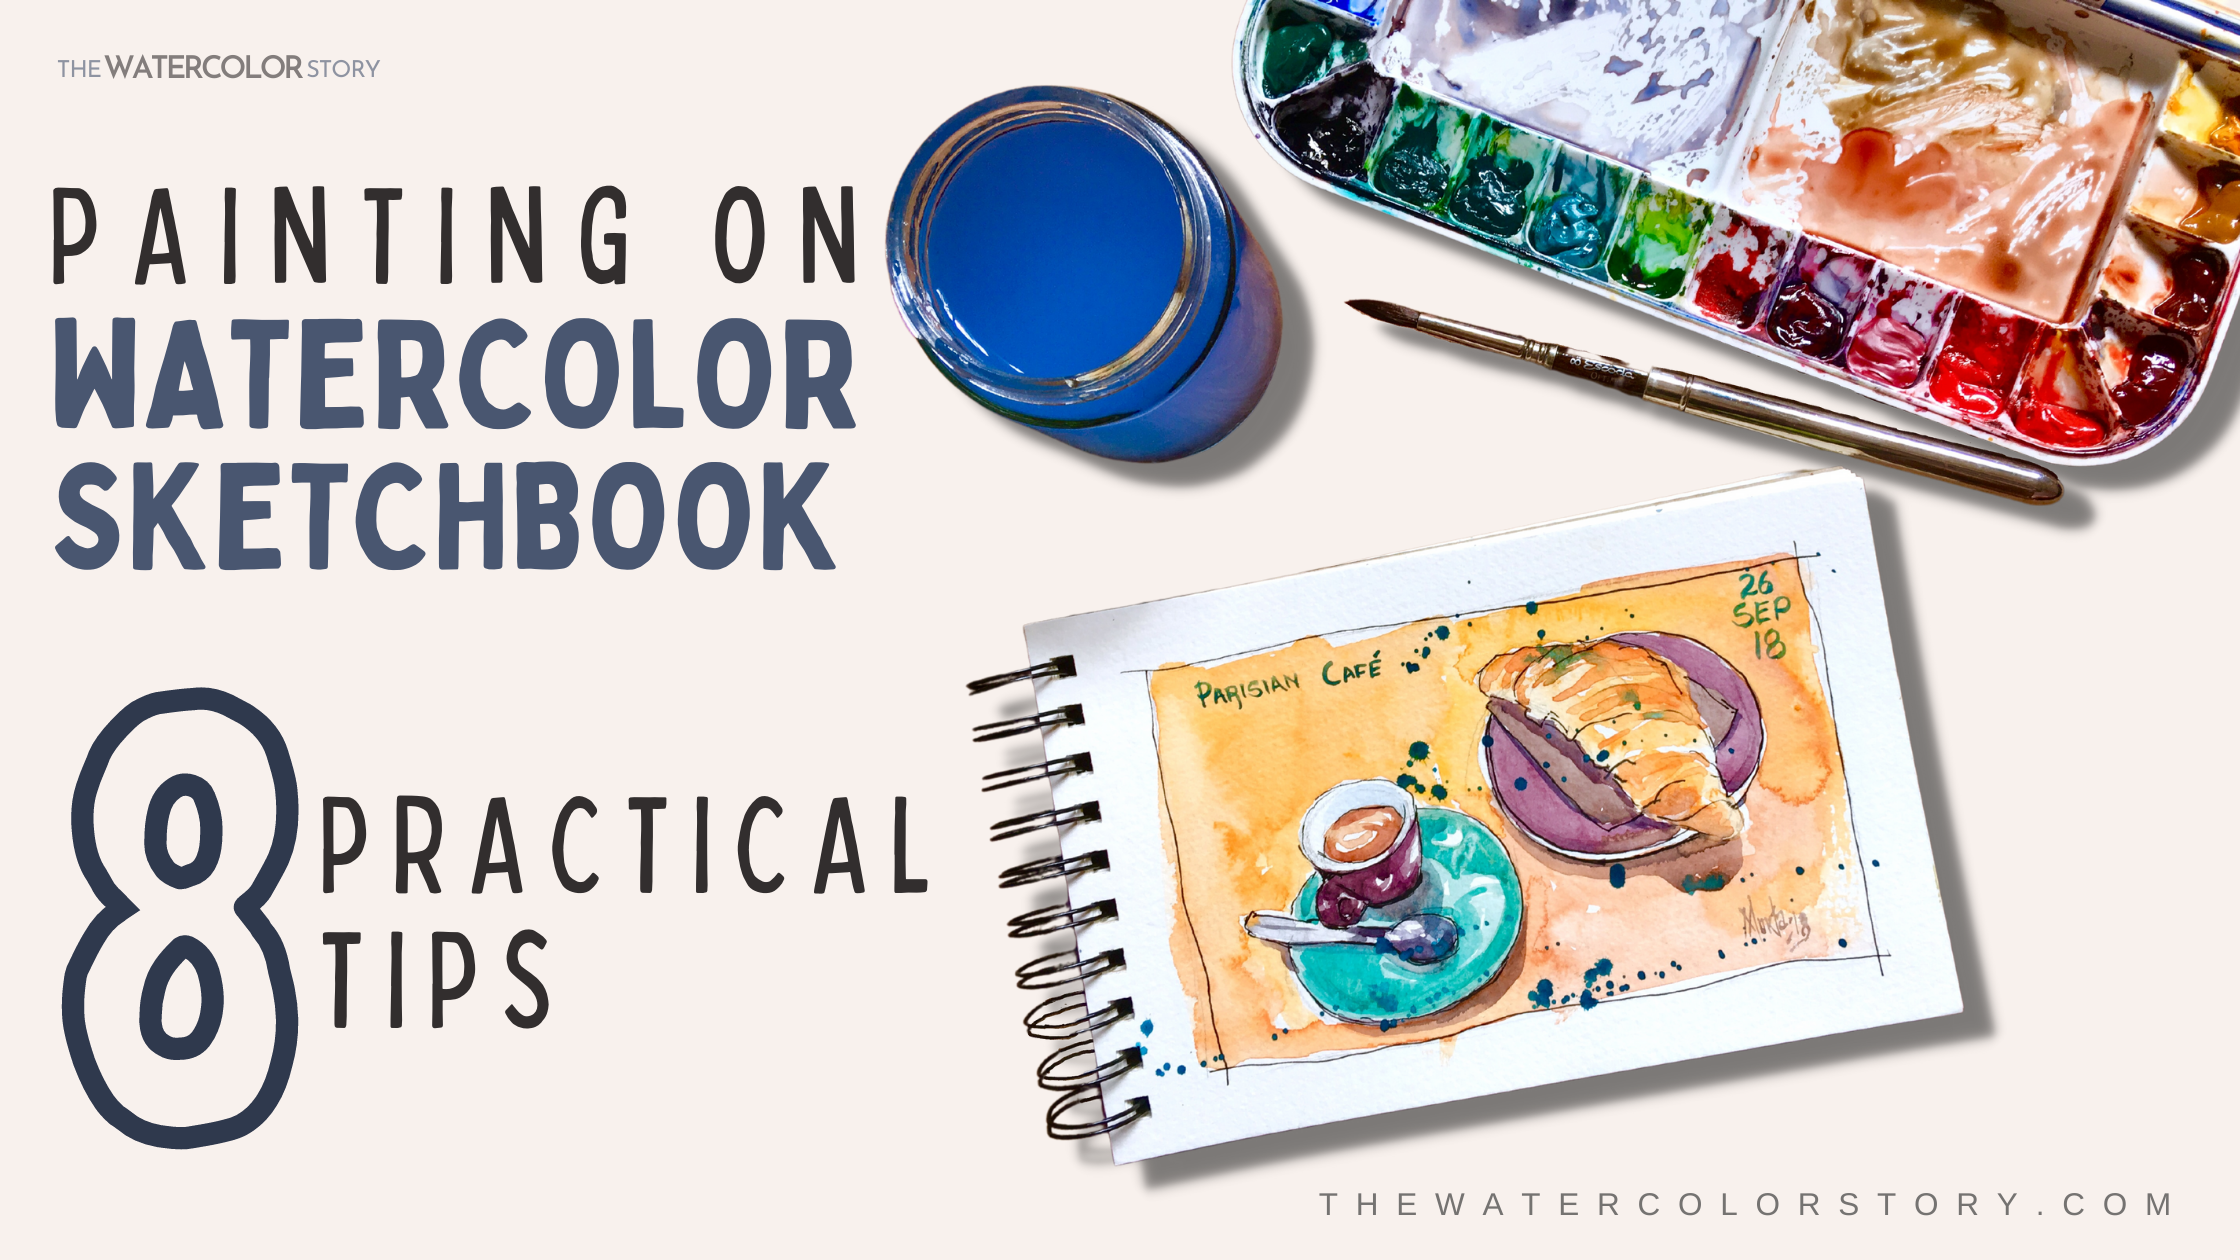 Watercolor Sketchbook